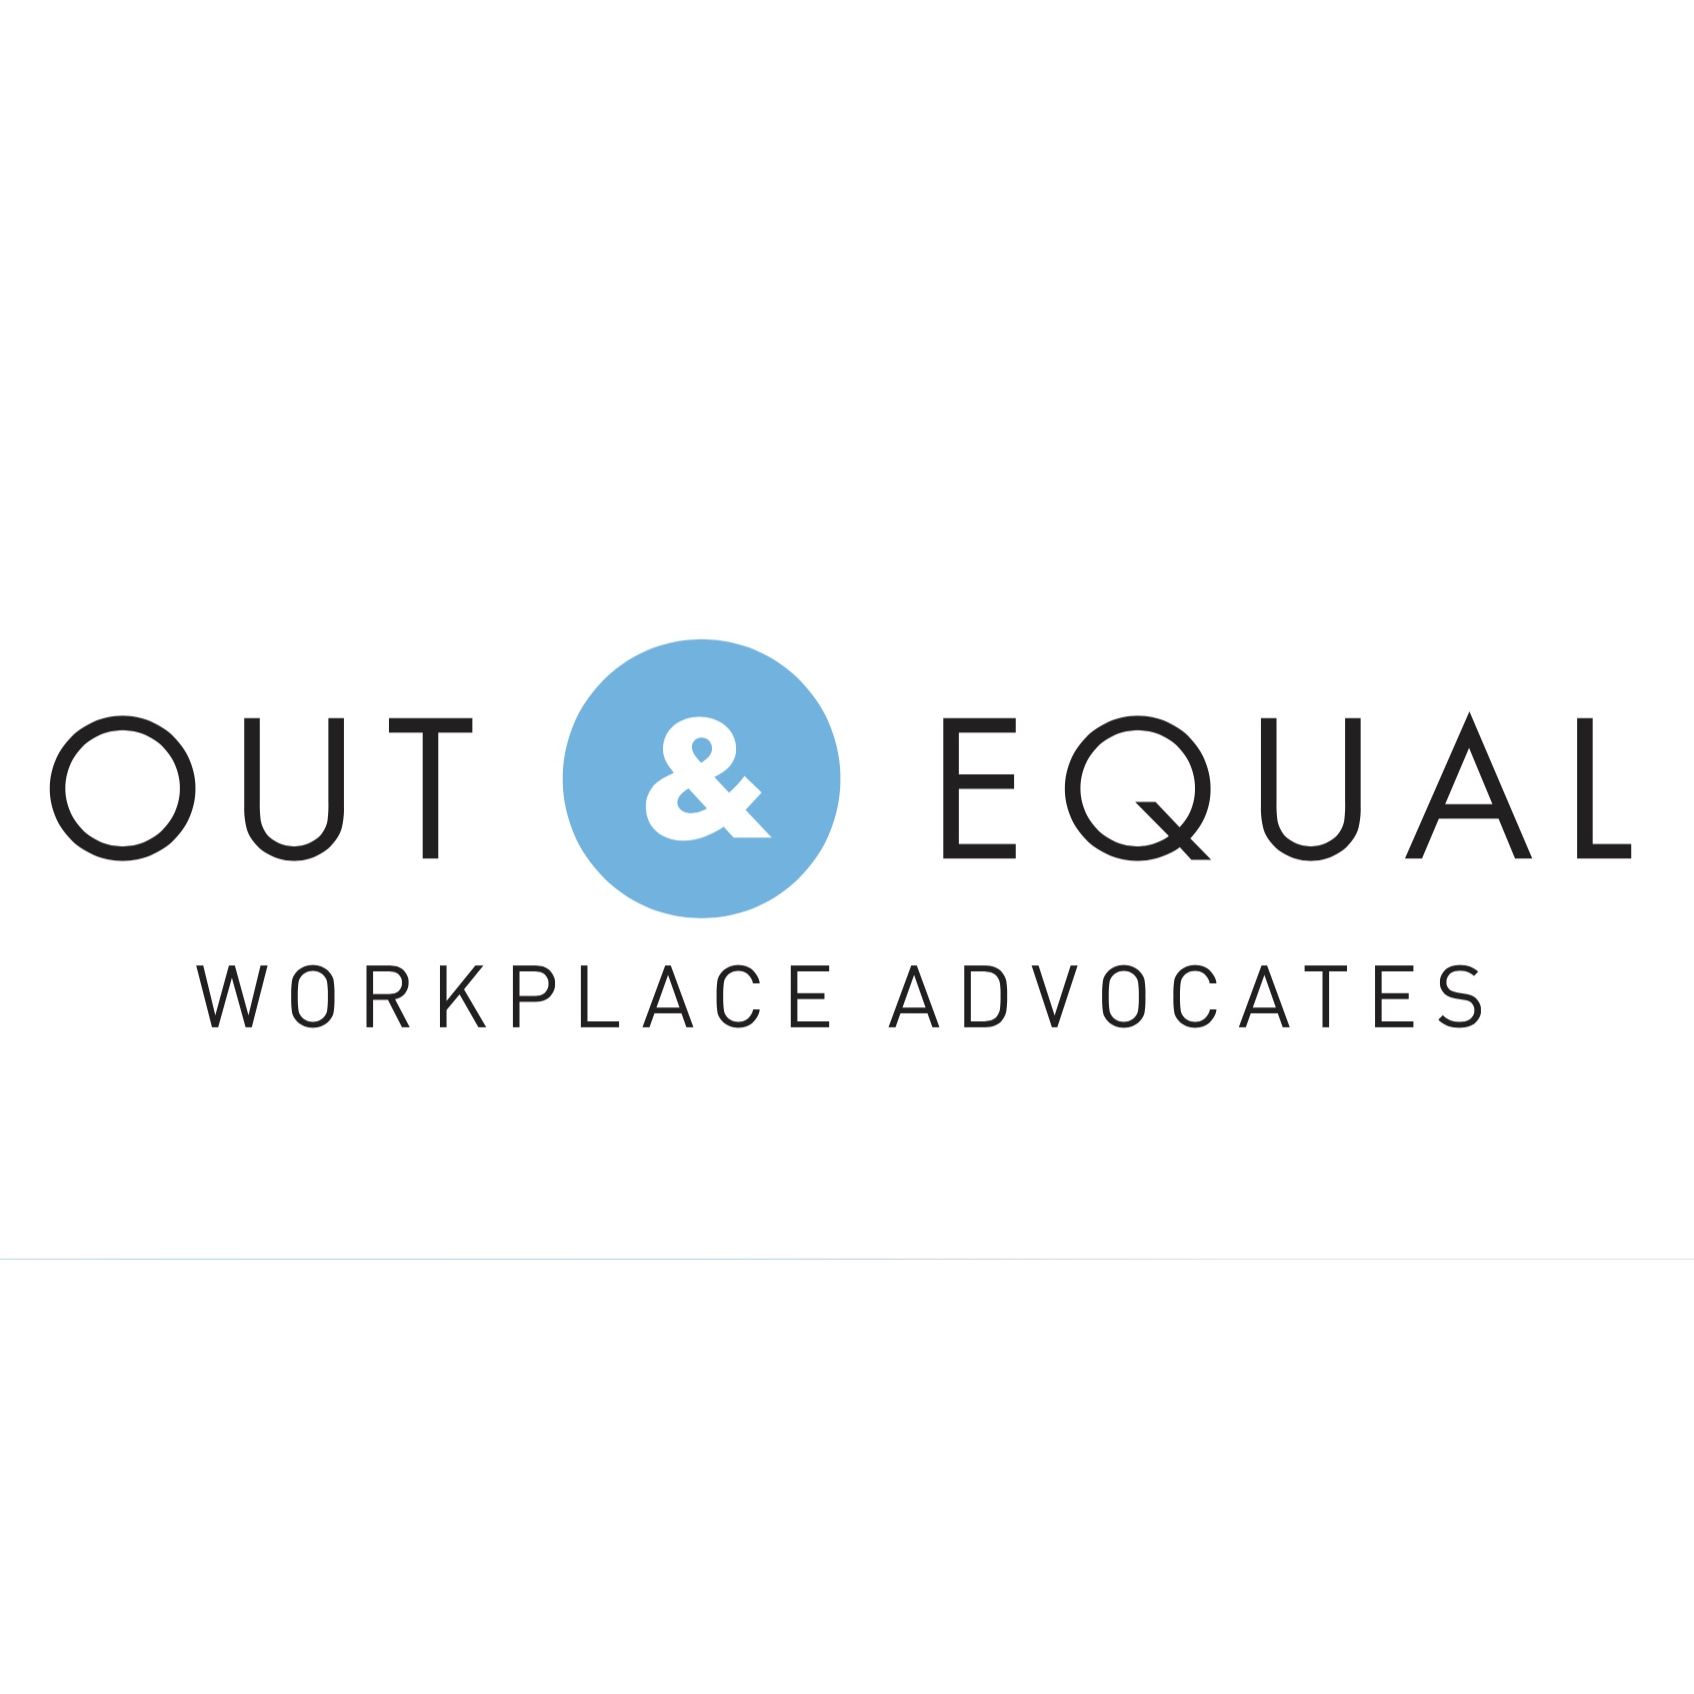 LGBTQ Organization in Sacramento California - Out & Equal